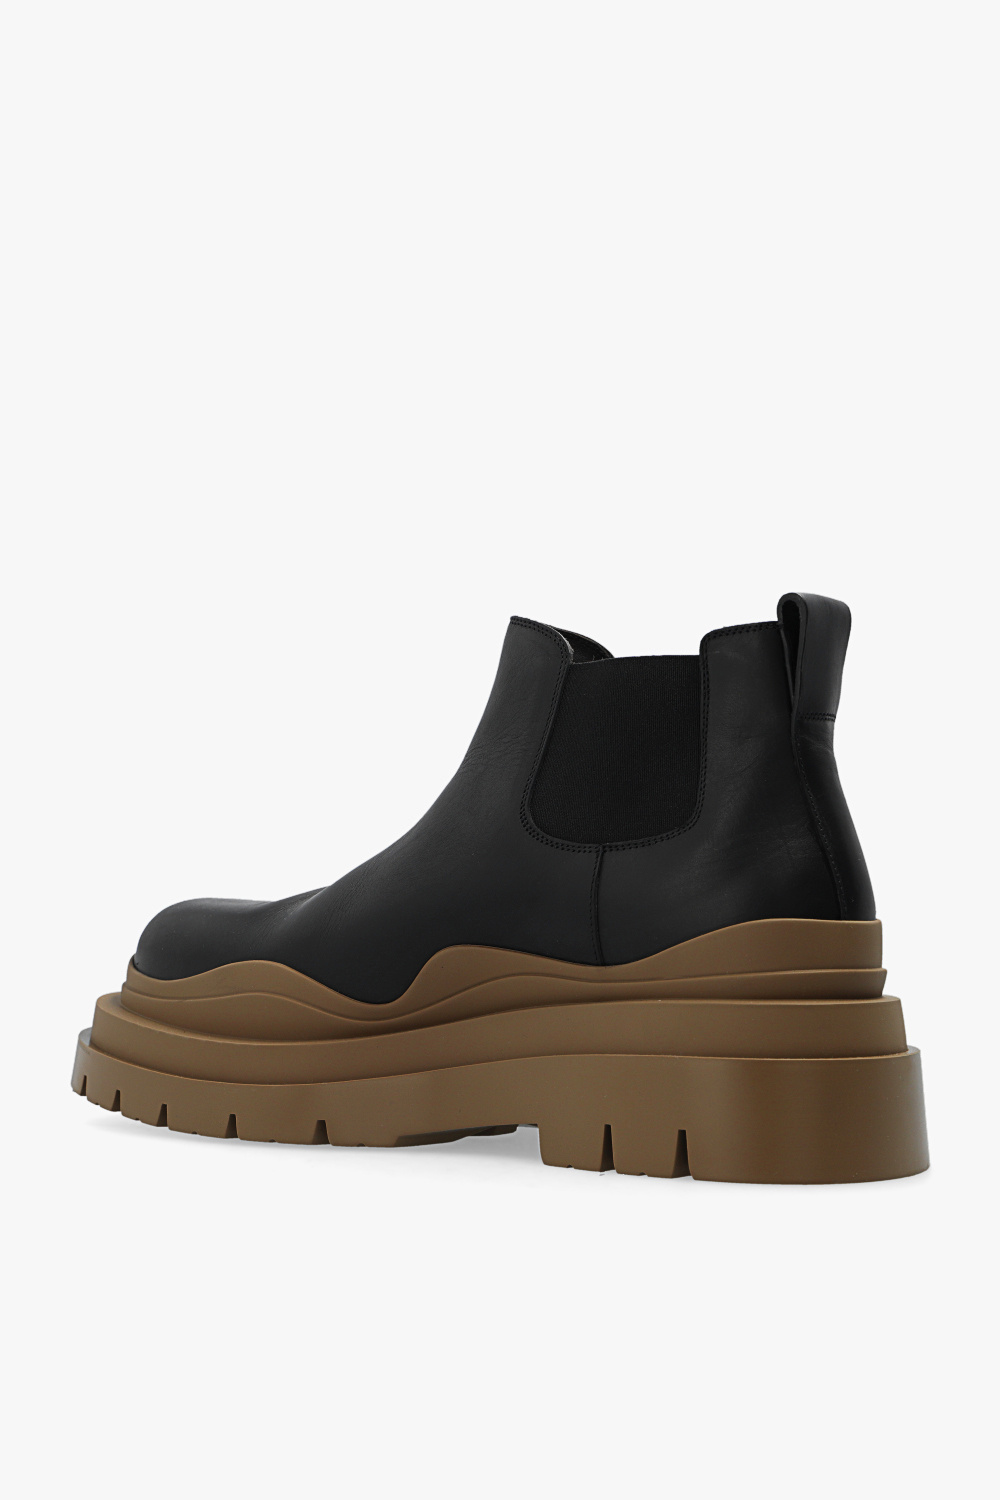 bottega weave Veneta ‘Tire’ leather Chelsea boots